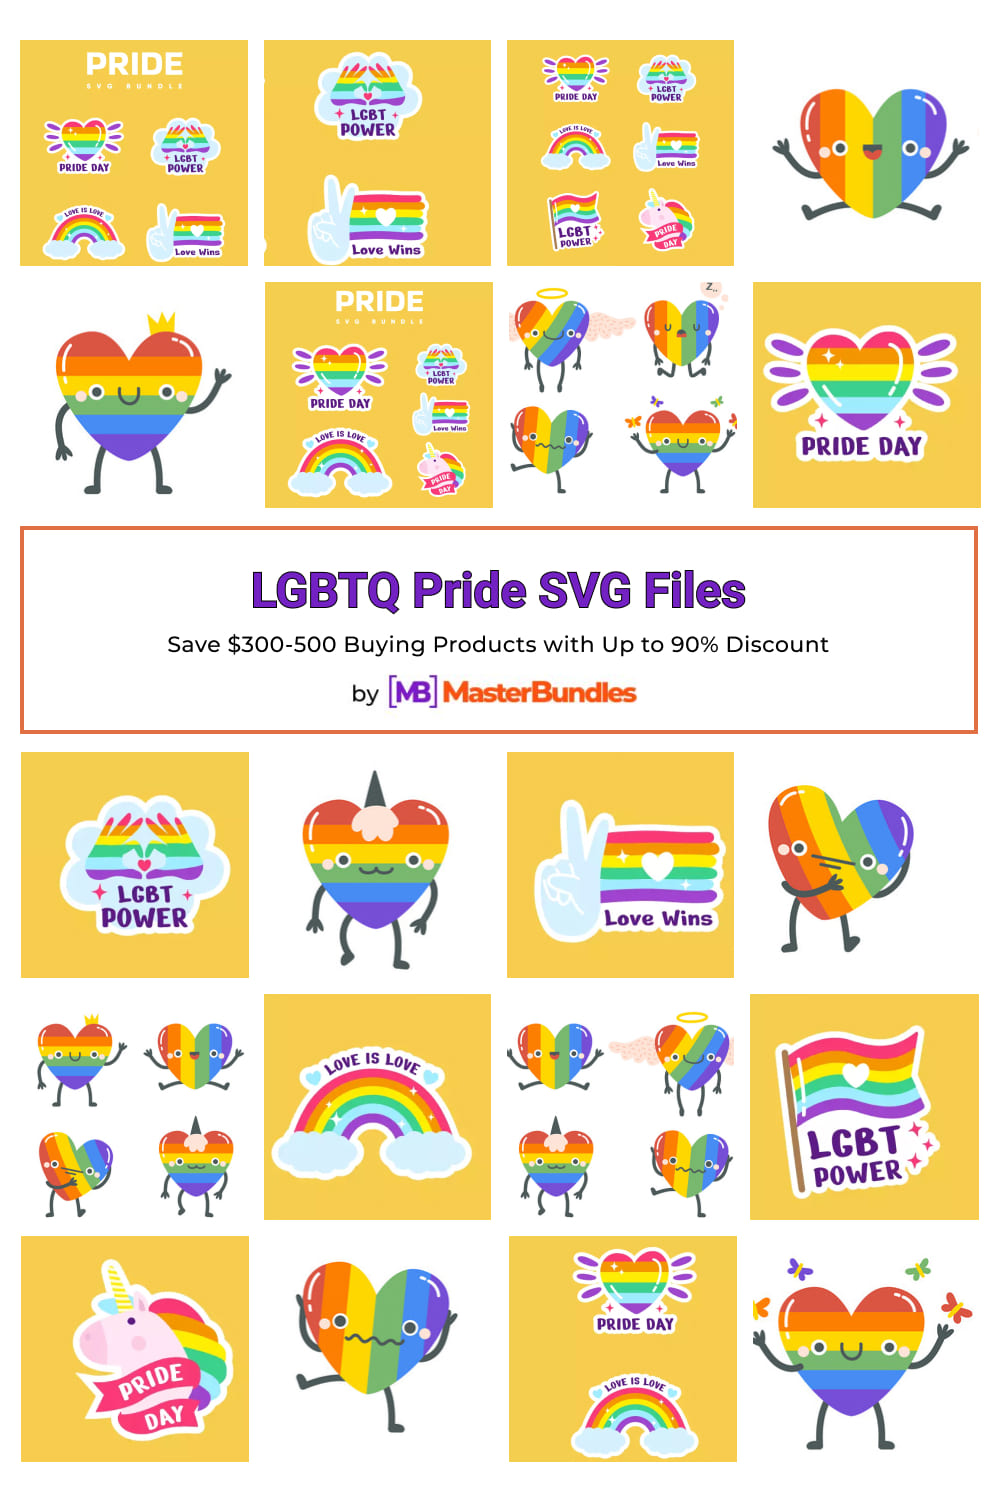 LGBTQ Pride SVG Files Pinterest image.